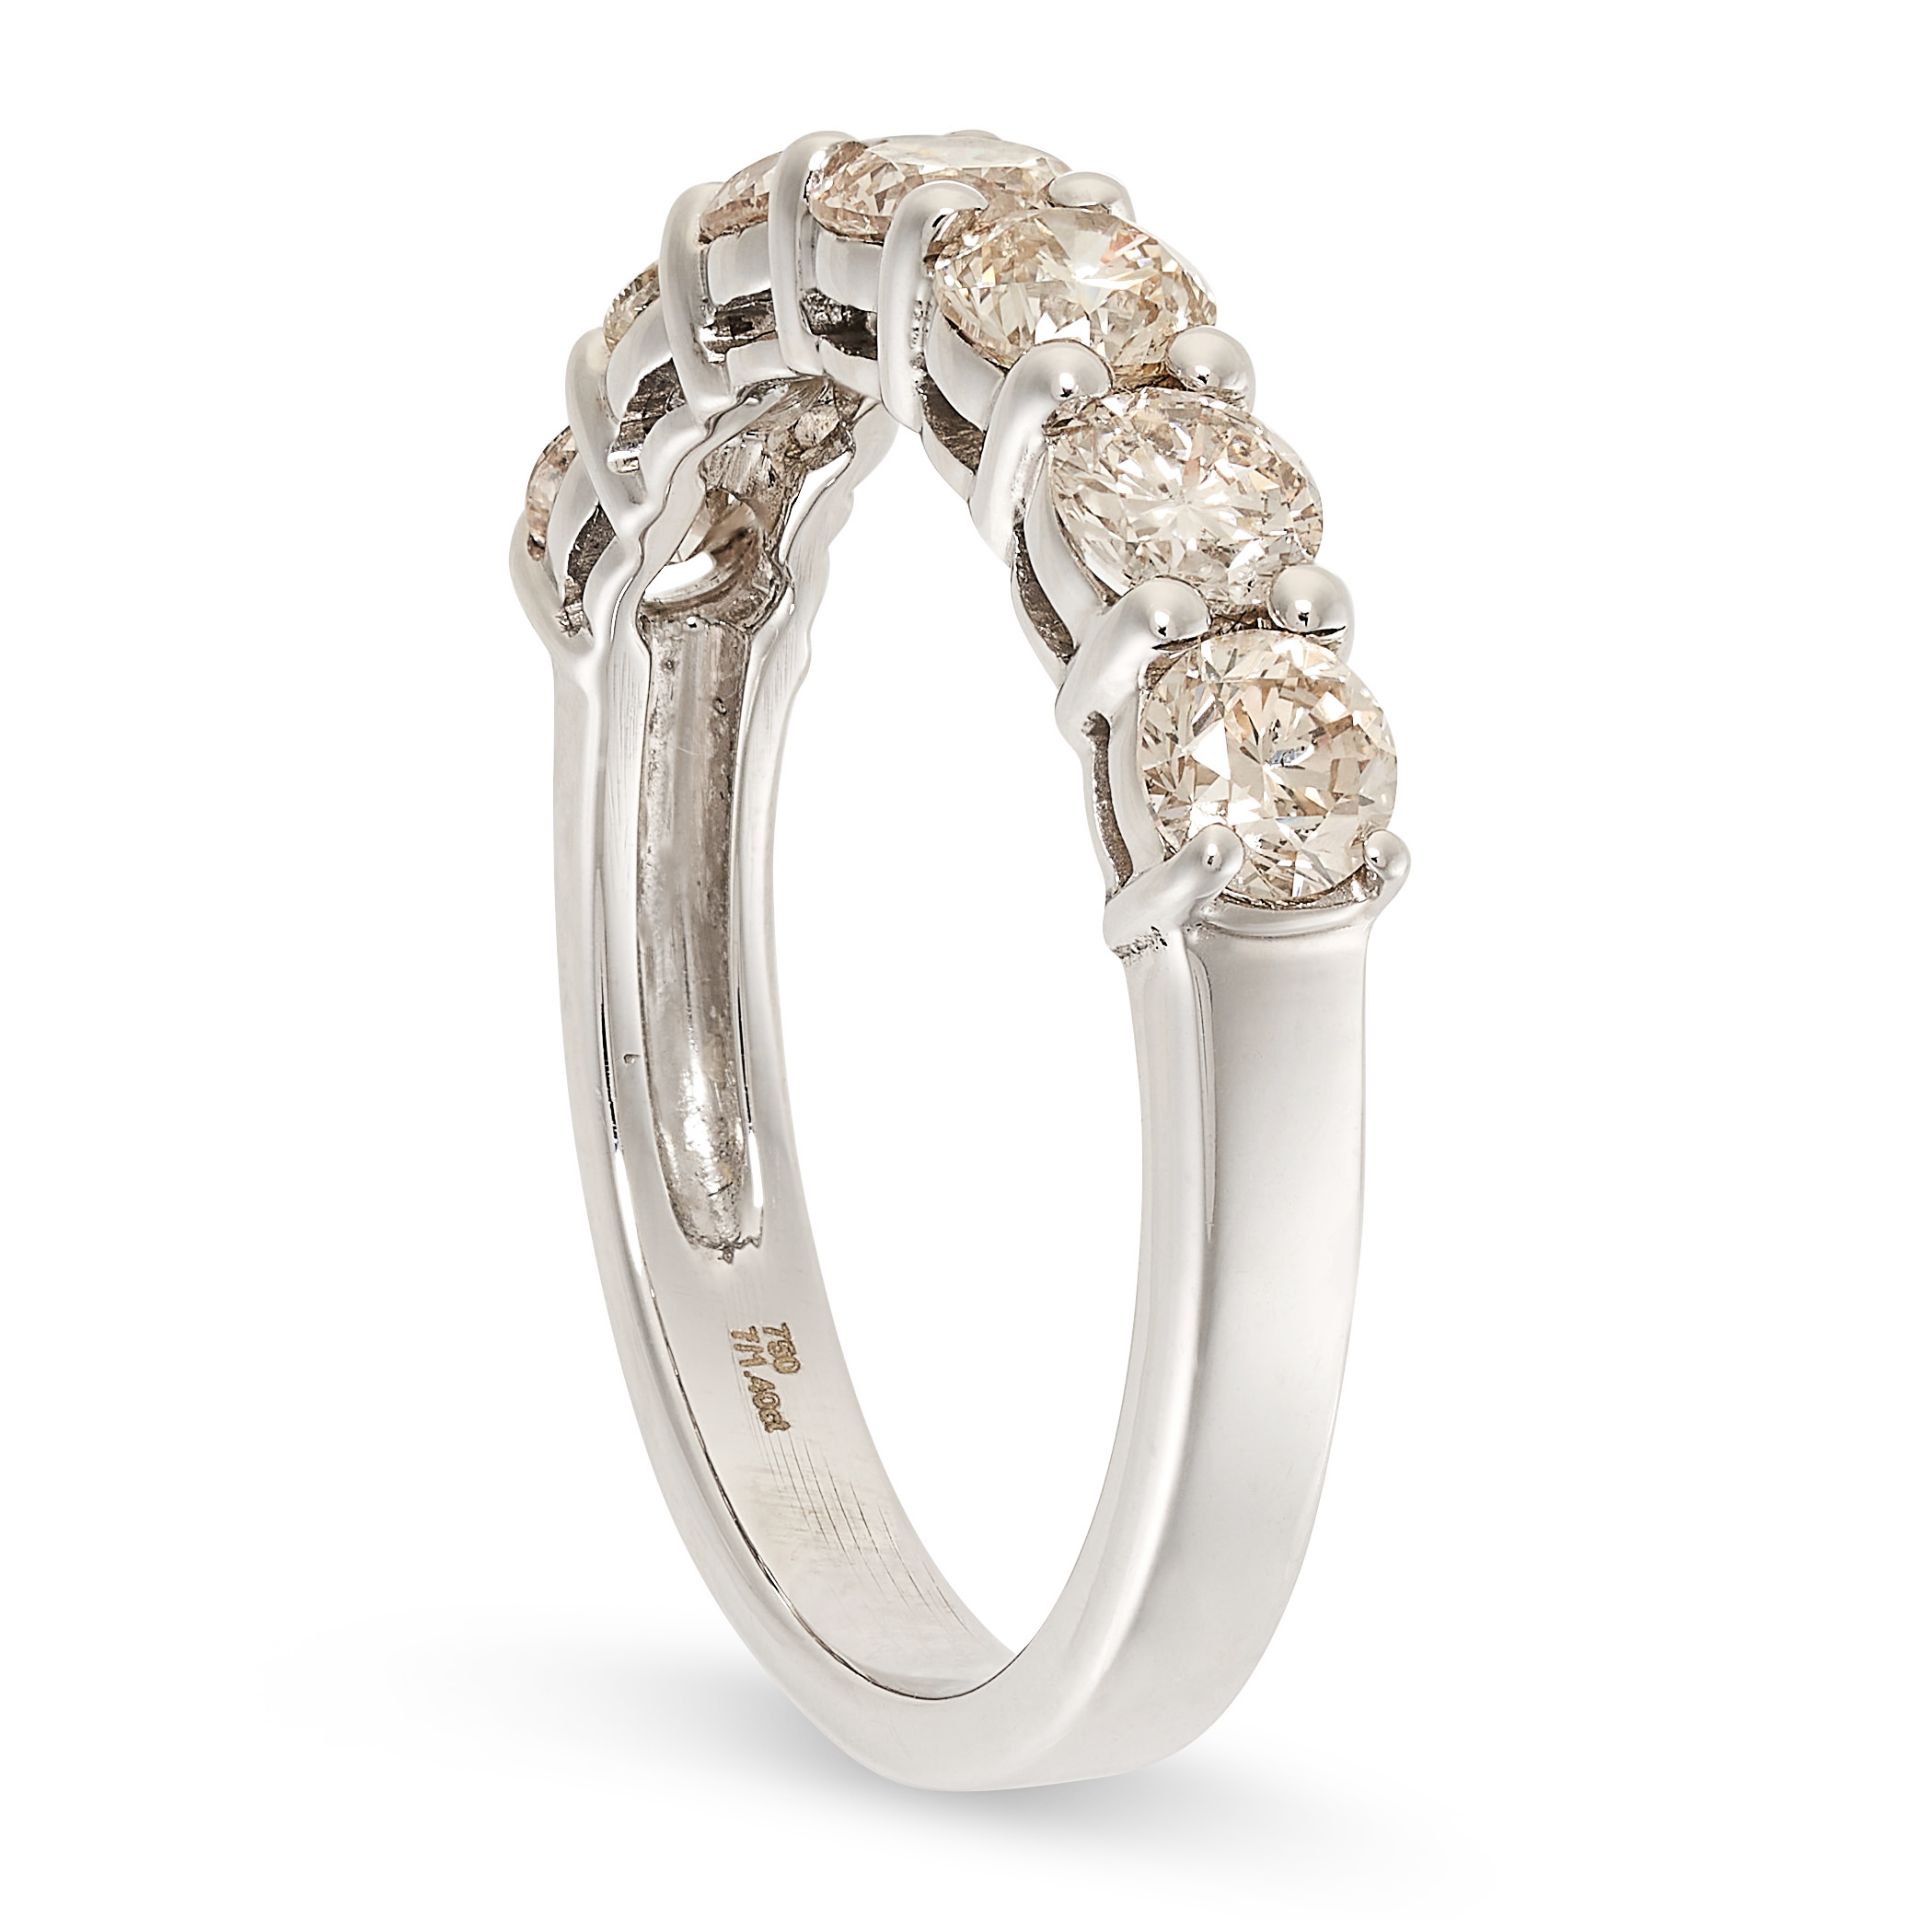 A DIAMOND SEVEN STONE RING in 18ct white gold, set with seven round cut diamonds, the diamonds all - Bild 2 aus 2